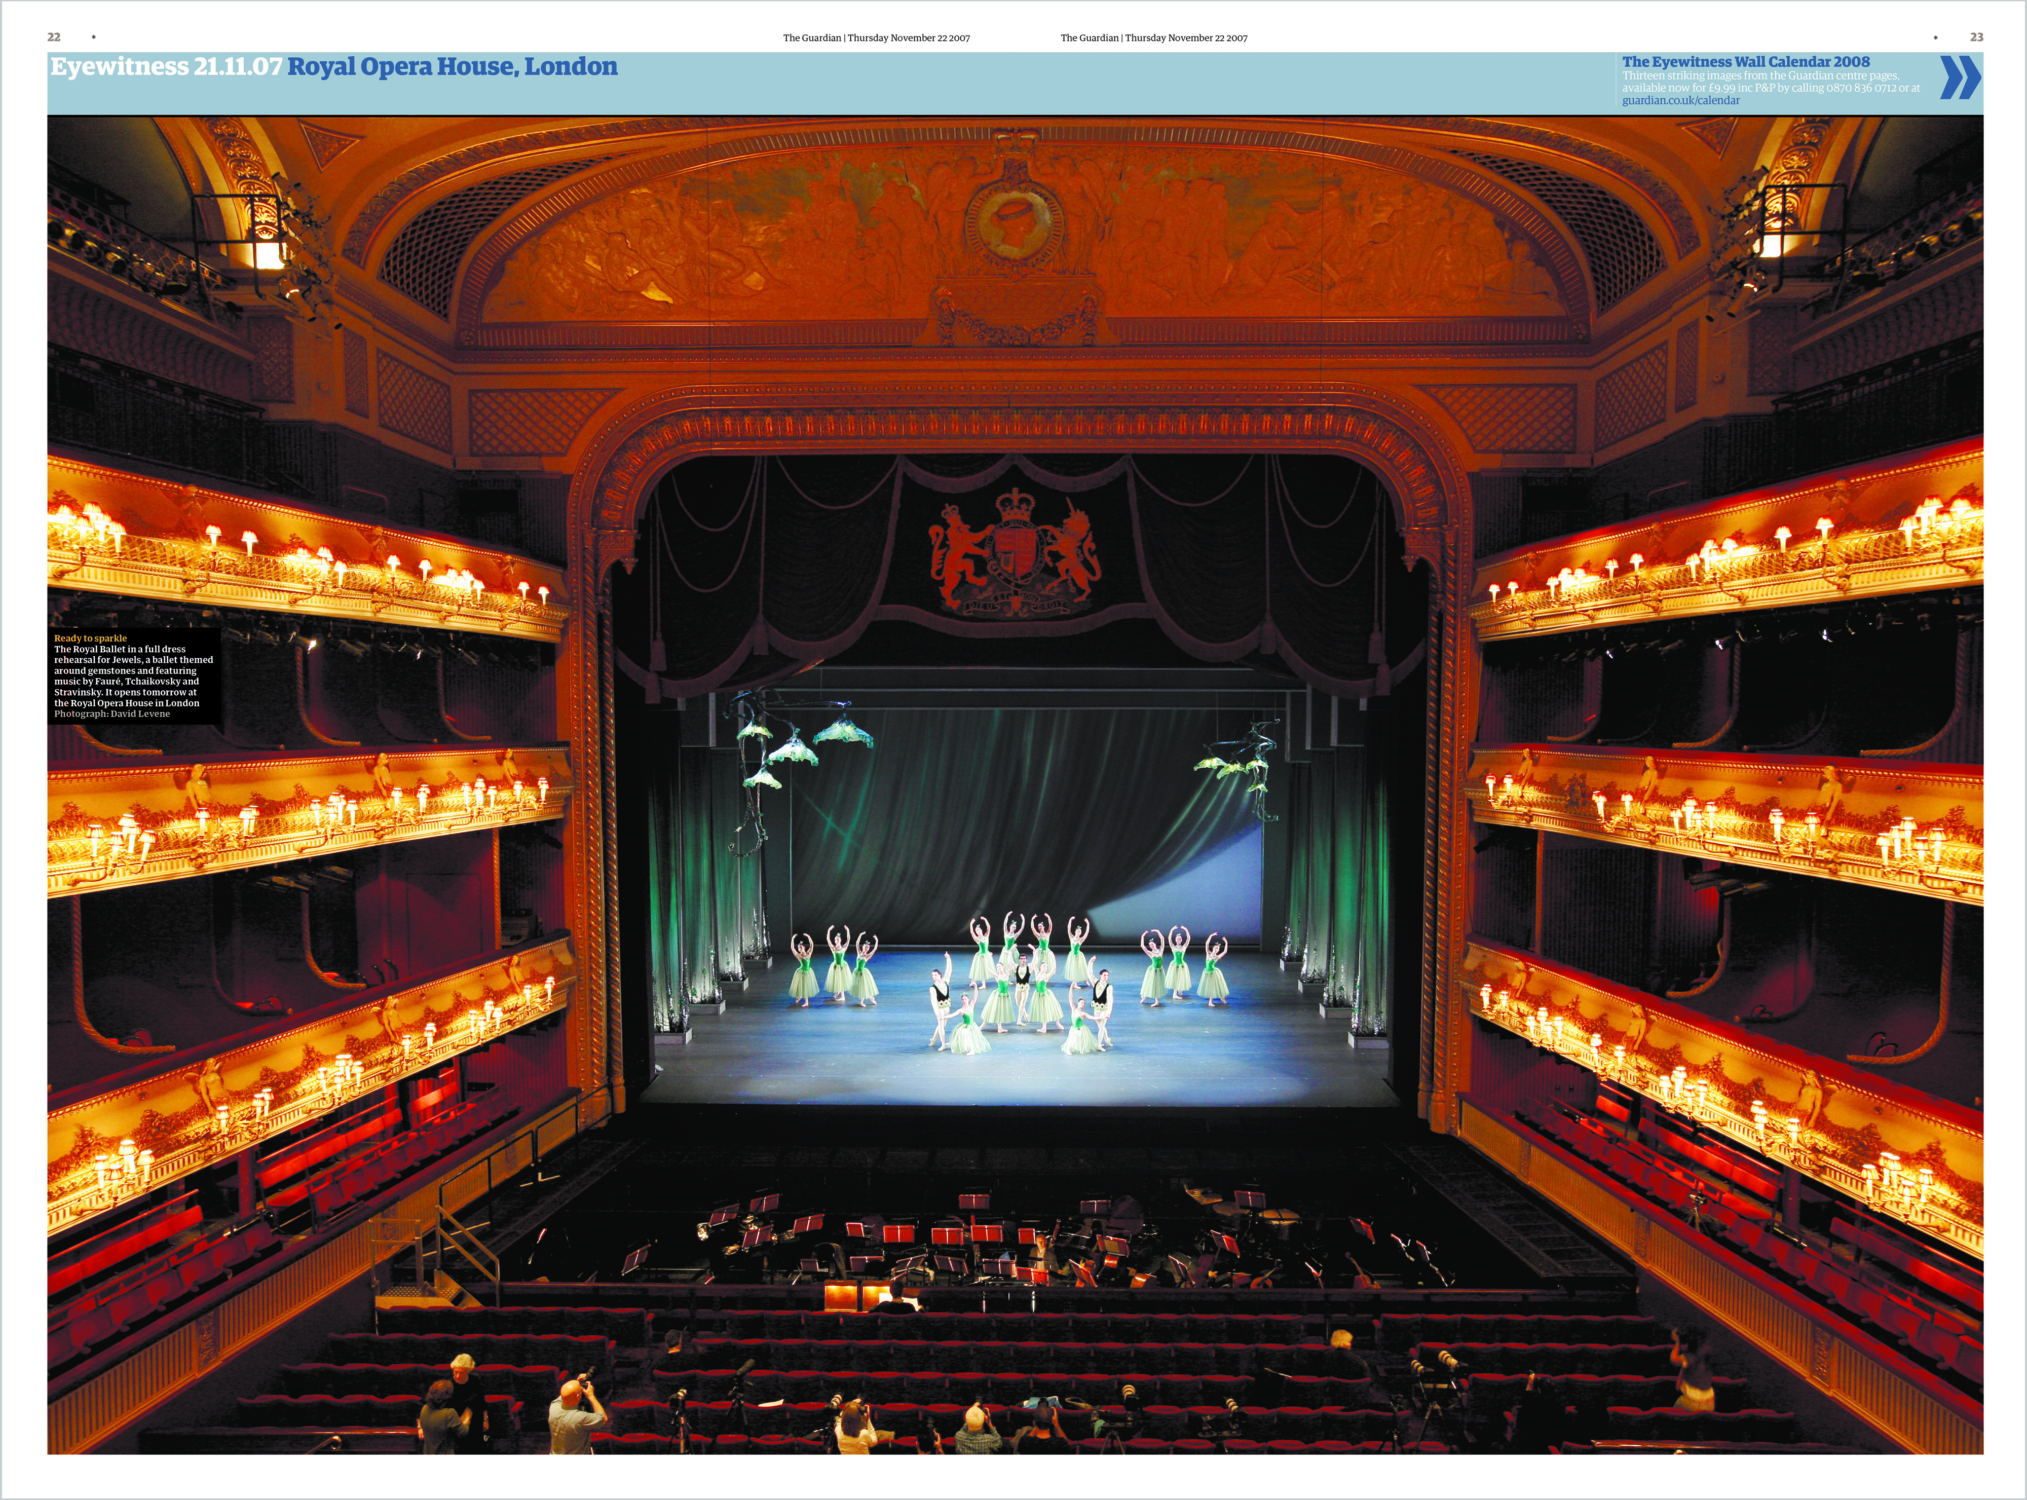 Royal Opera House, London, David Levene Photography